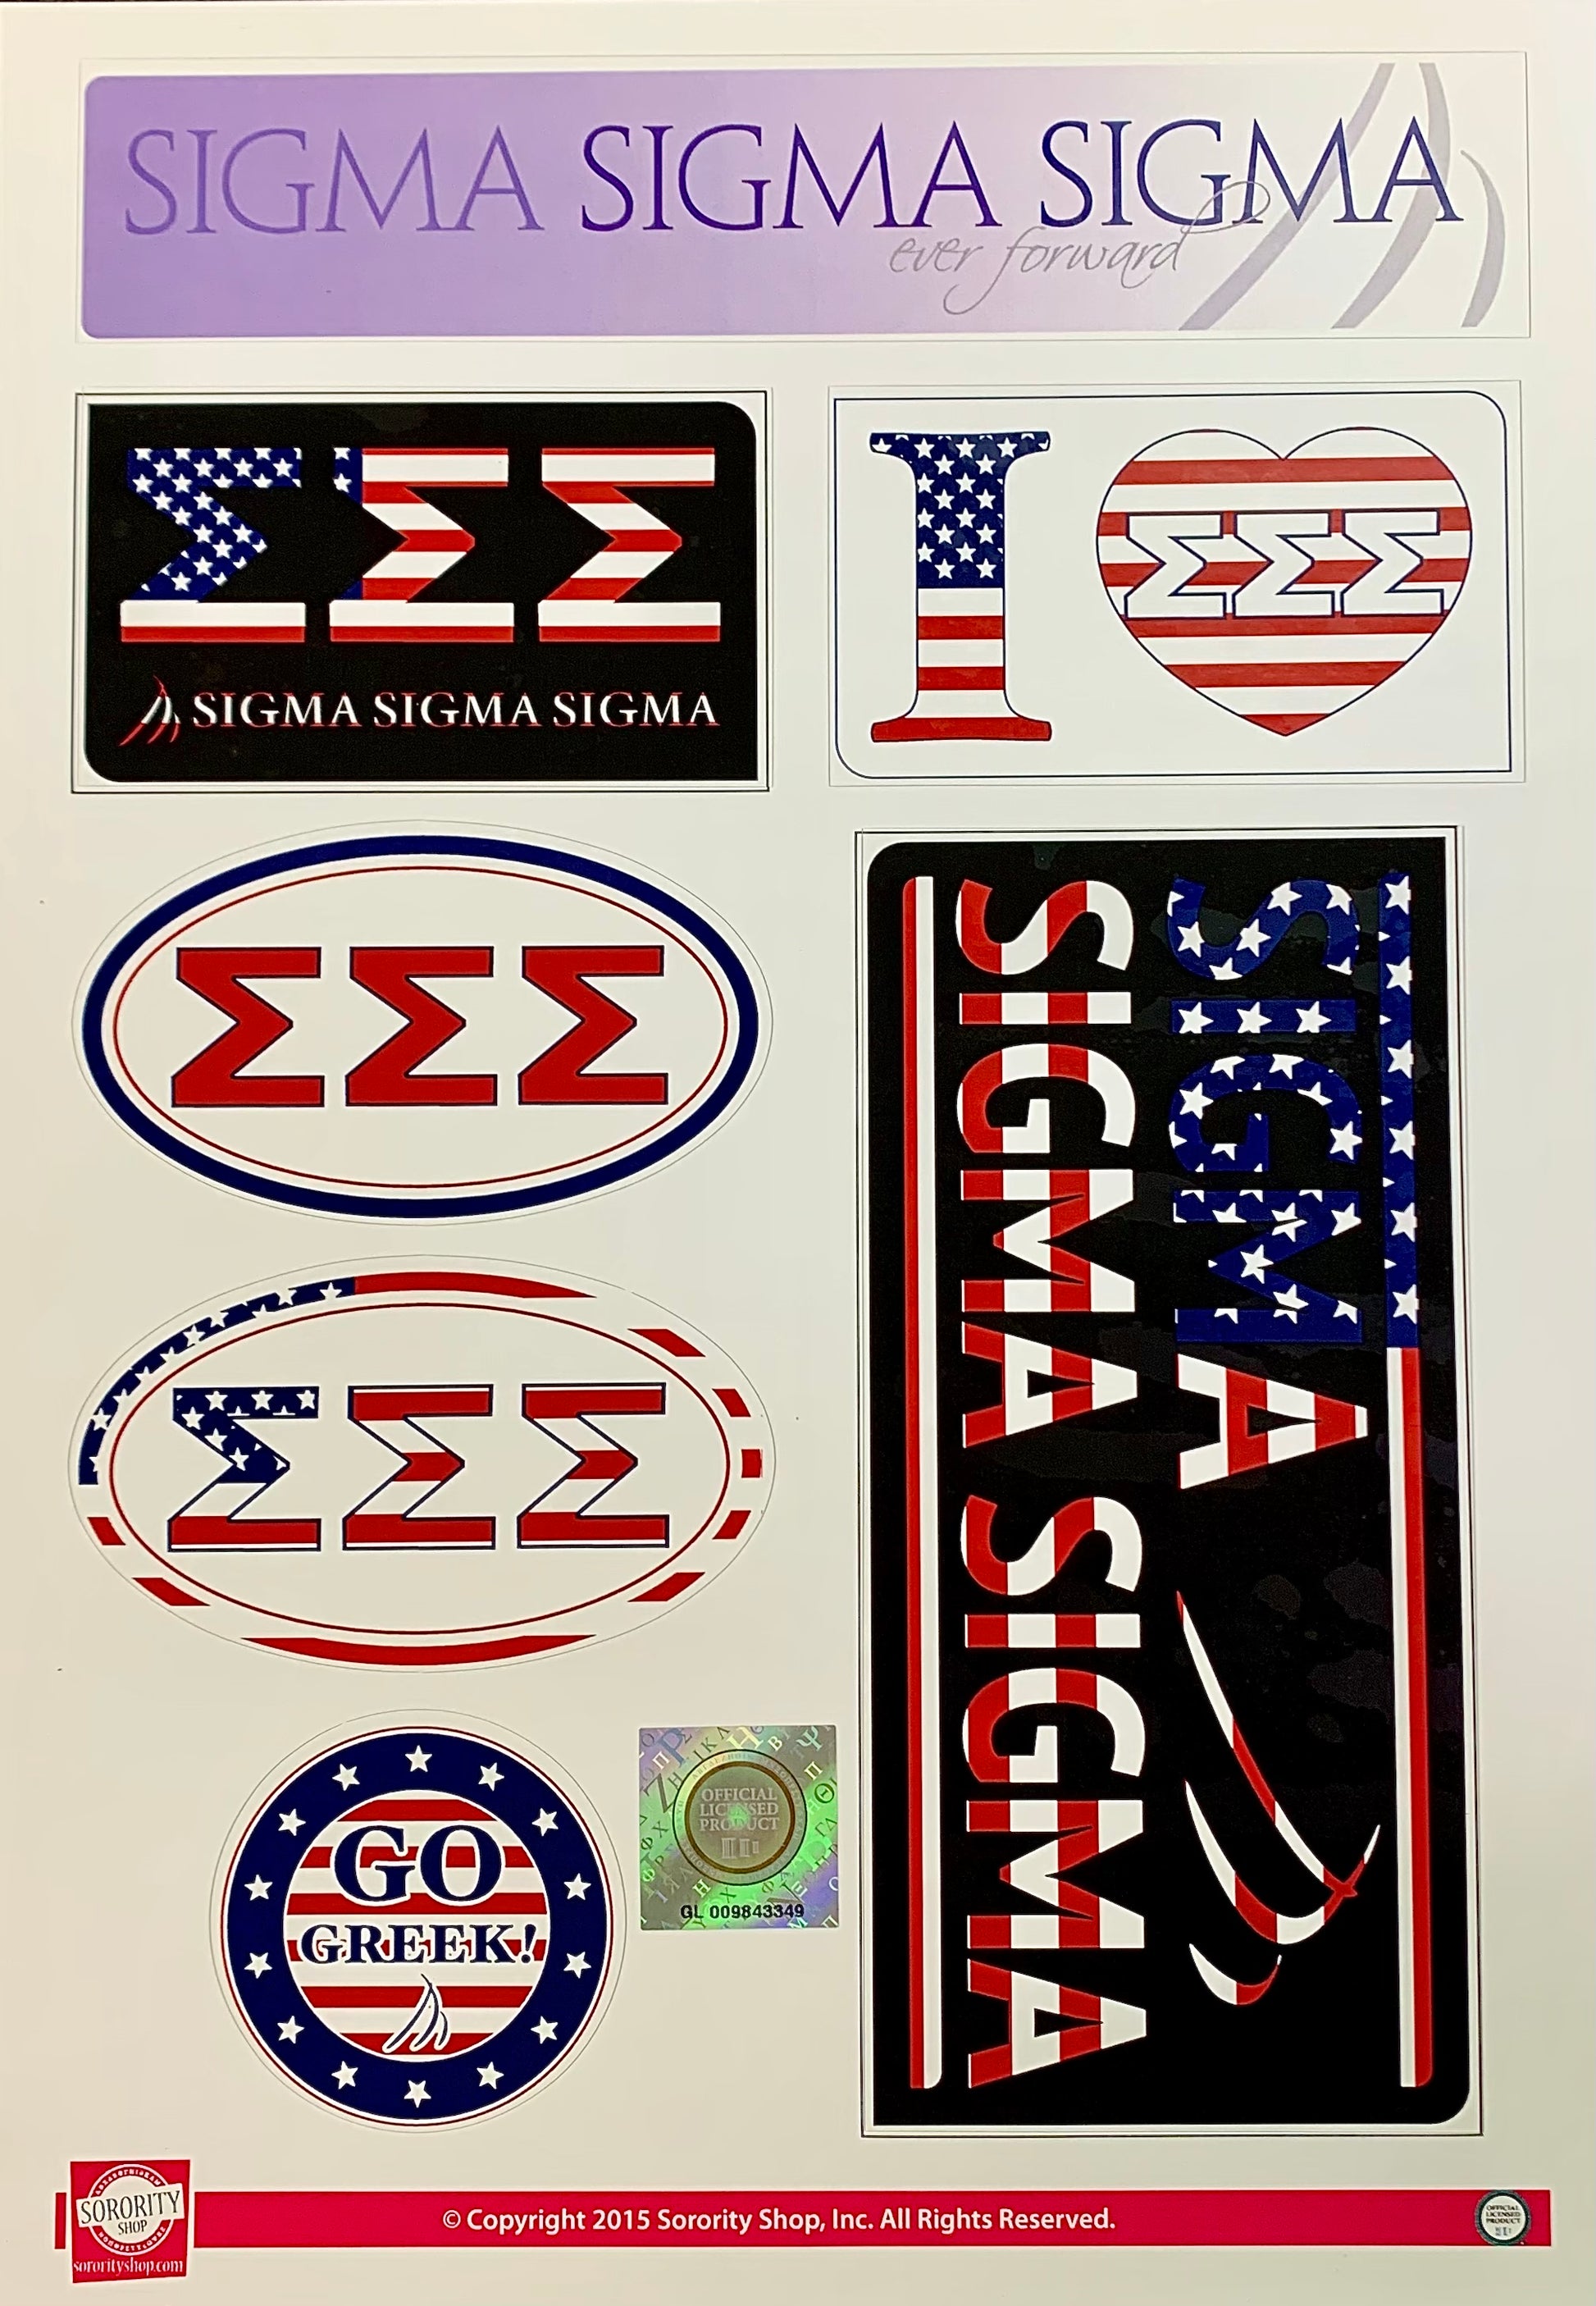 Sigma Sigma Sigma Sticker Sheet - Virginia Book Company